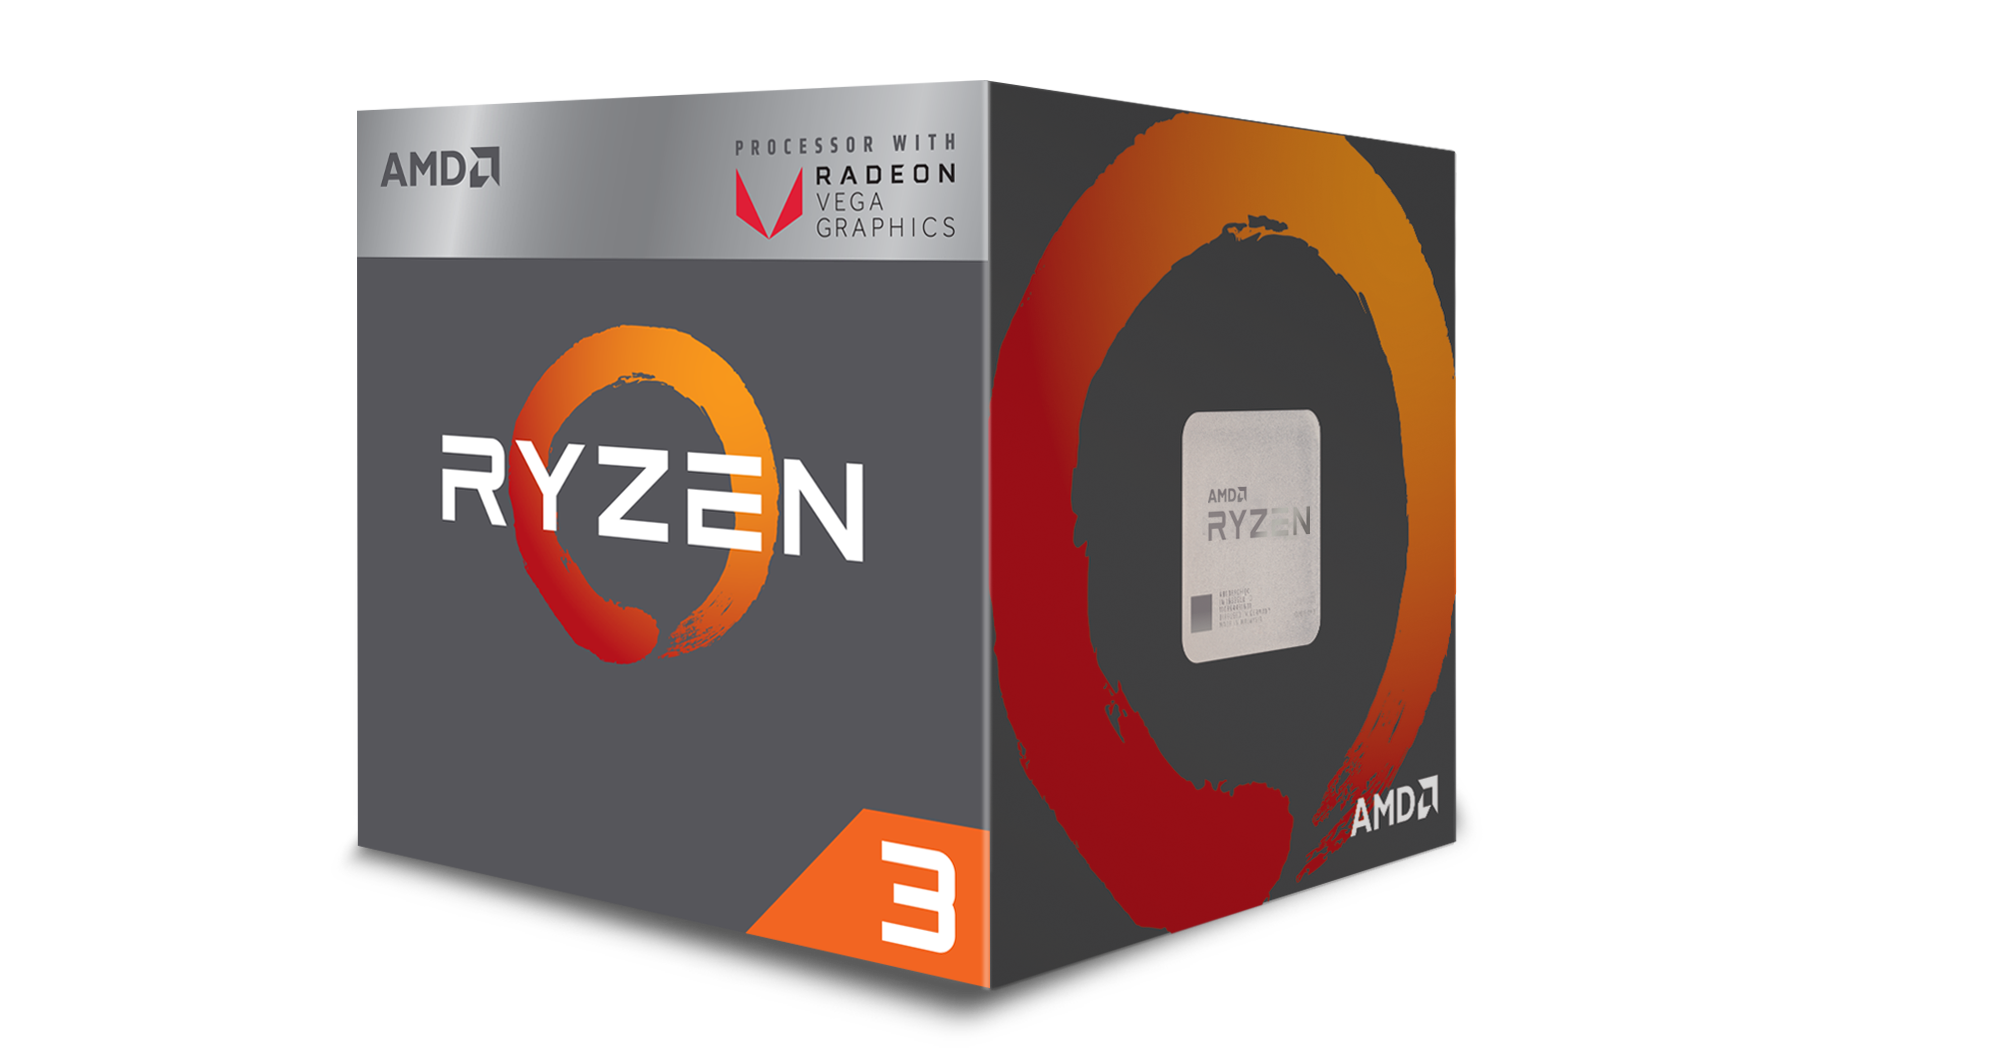 AMD Ryzen 3 2200G processor